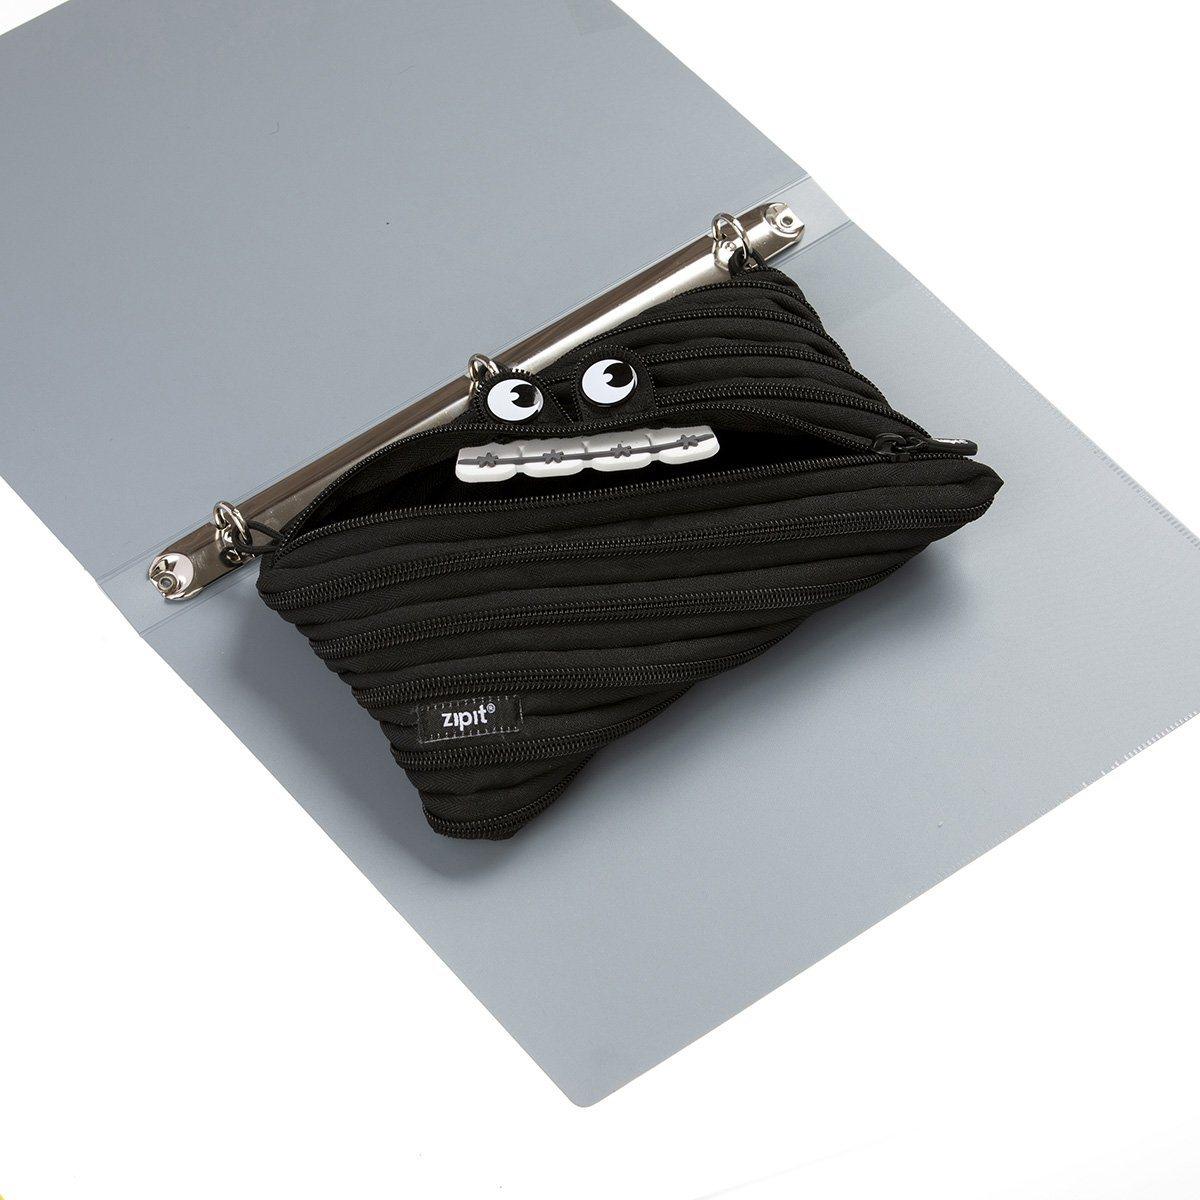 Zipit Gorge Large Pencil Case for Kids, Cute Pencil Pouch for Boys & Girls (Black)